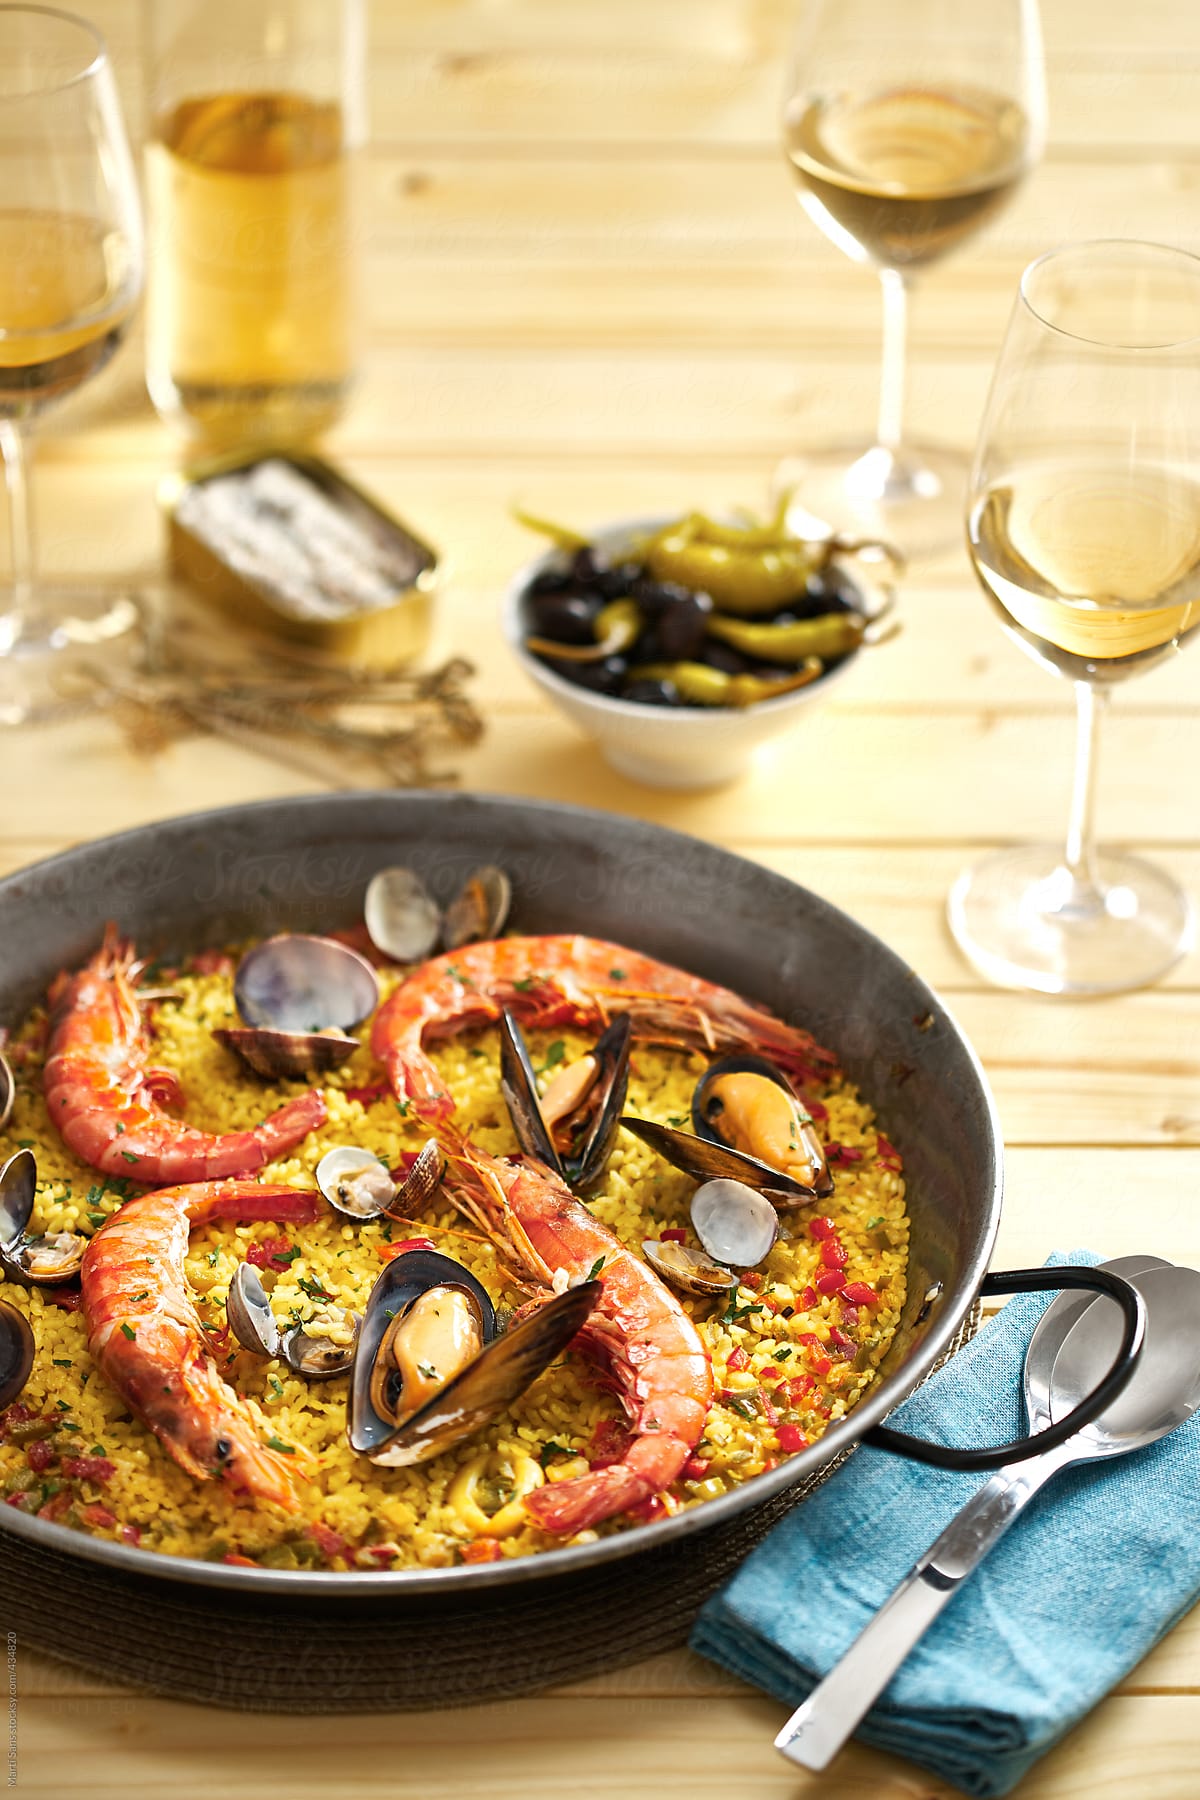 Spanish paella meal and white wine